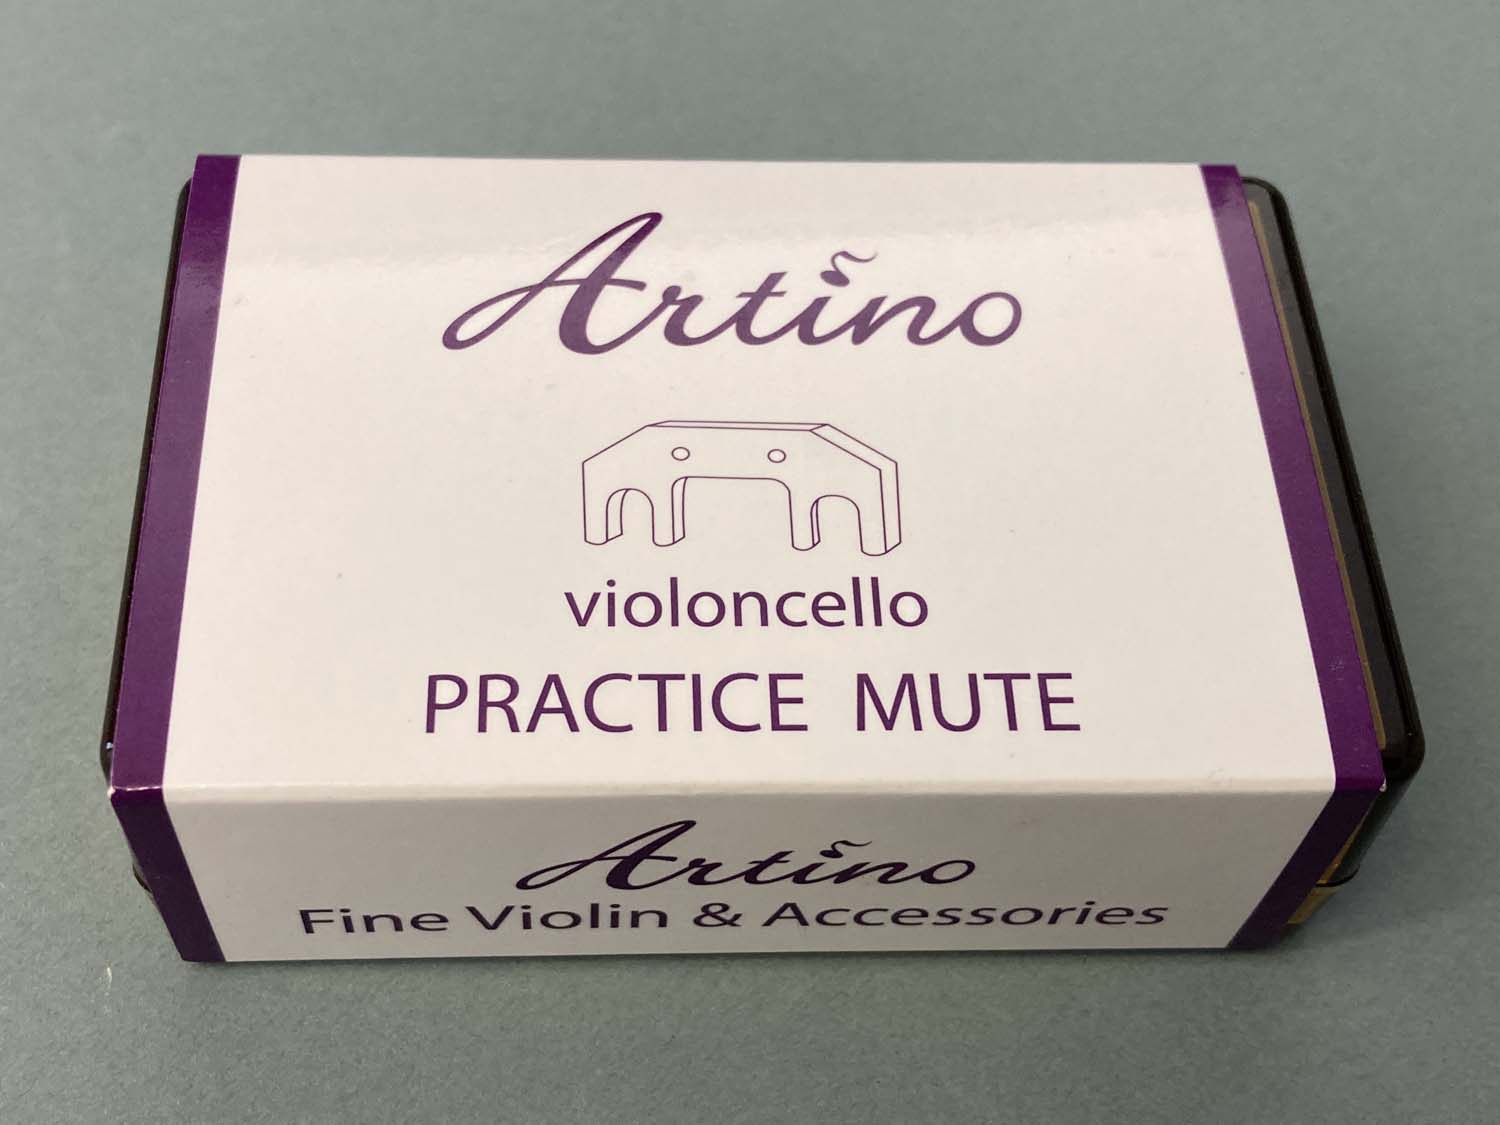 Artino Rubber-covered Steel Practice Mute for Cello